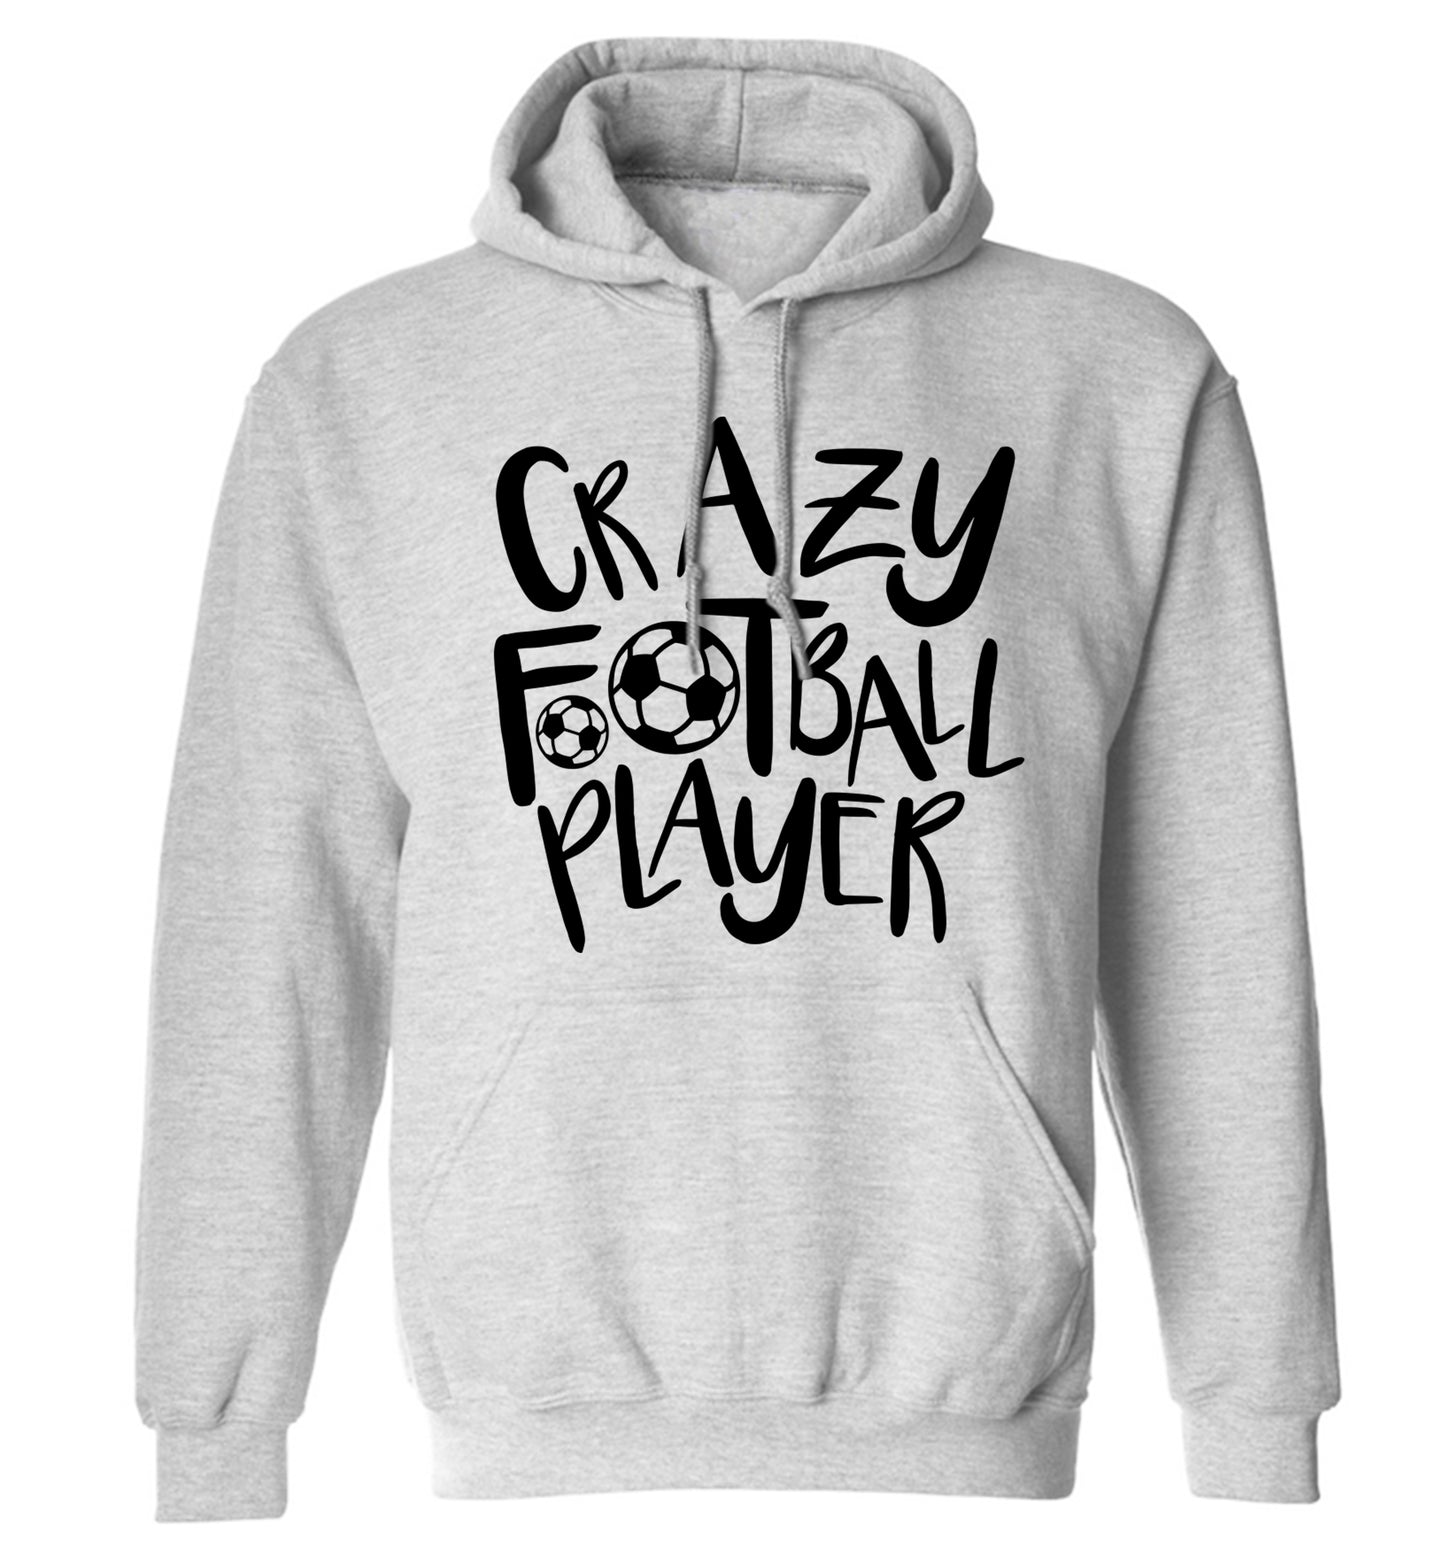 Crazy football player adults unisexgrey hoodie 2XL